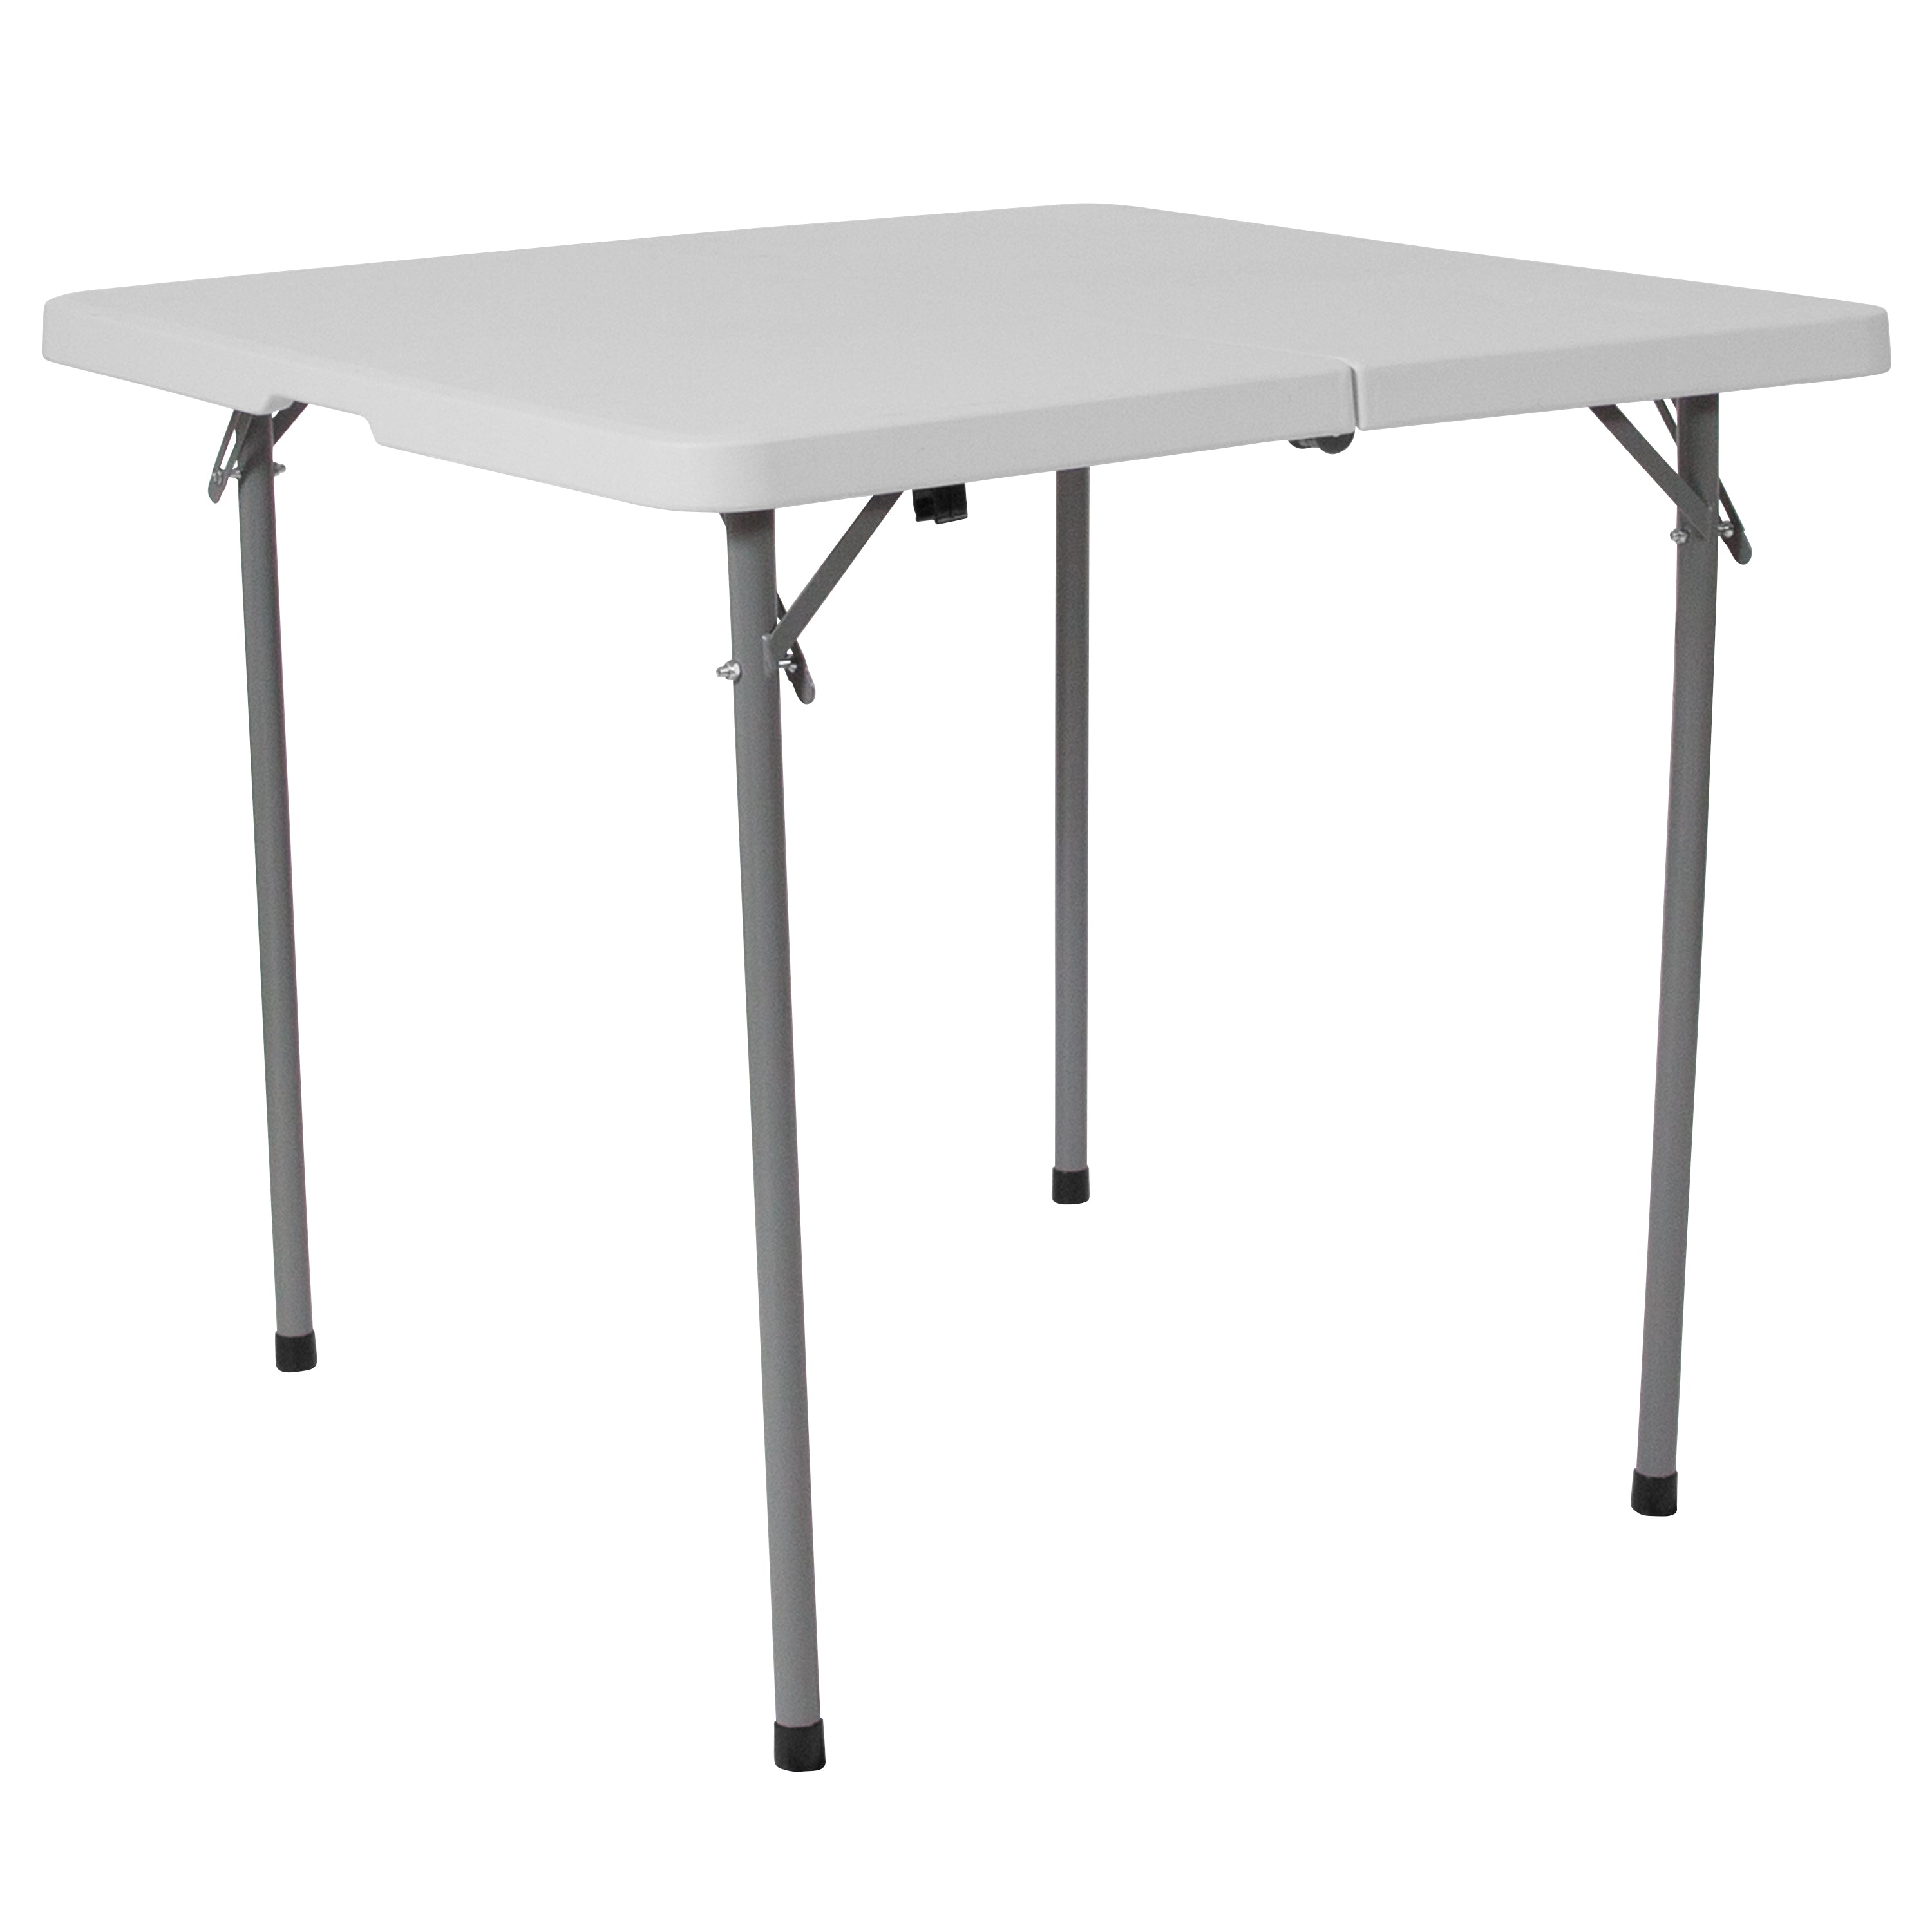 2.79-Foot Square Bi-Fold Plastic Folding Table with Carrying Handle-Square Plastic Folding Table-Flash Furniture-Wall2Wall Furnishings